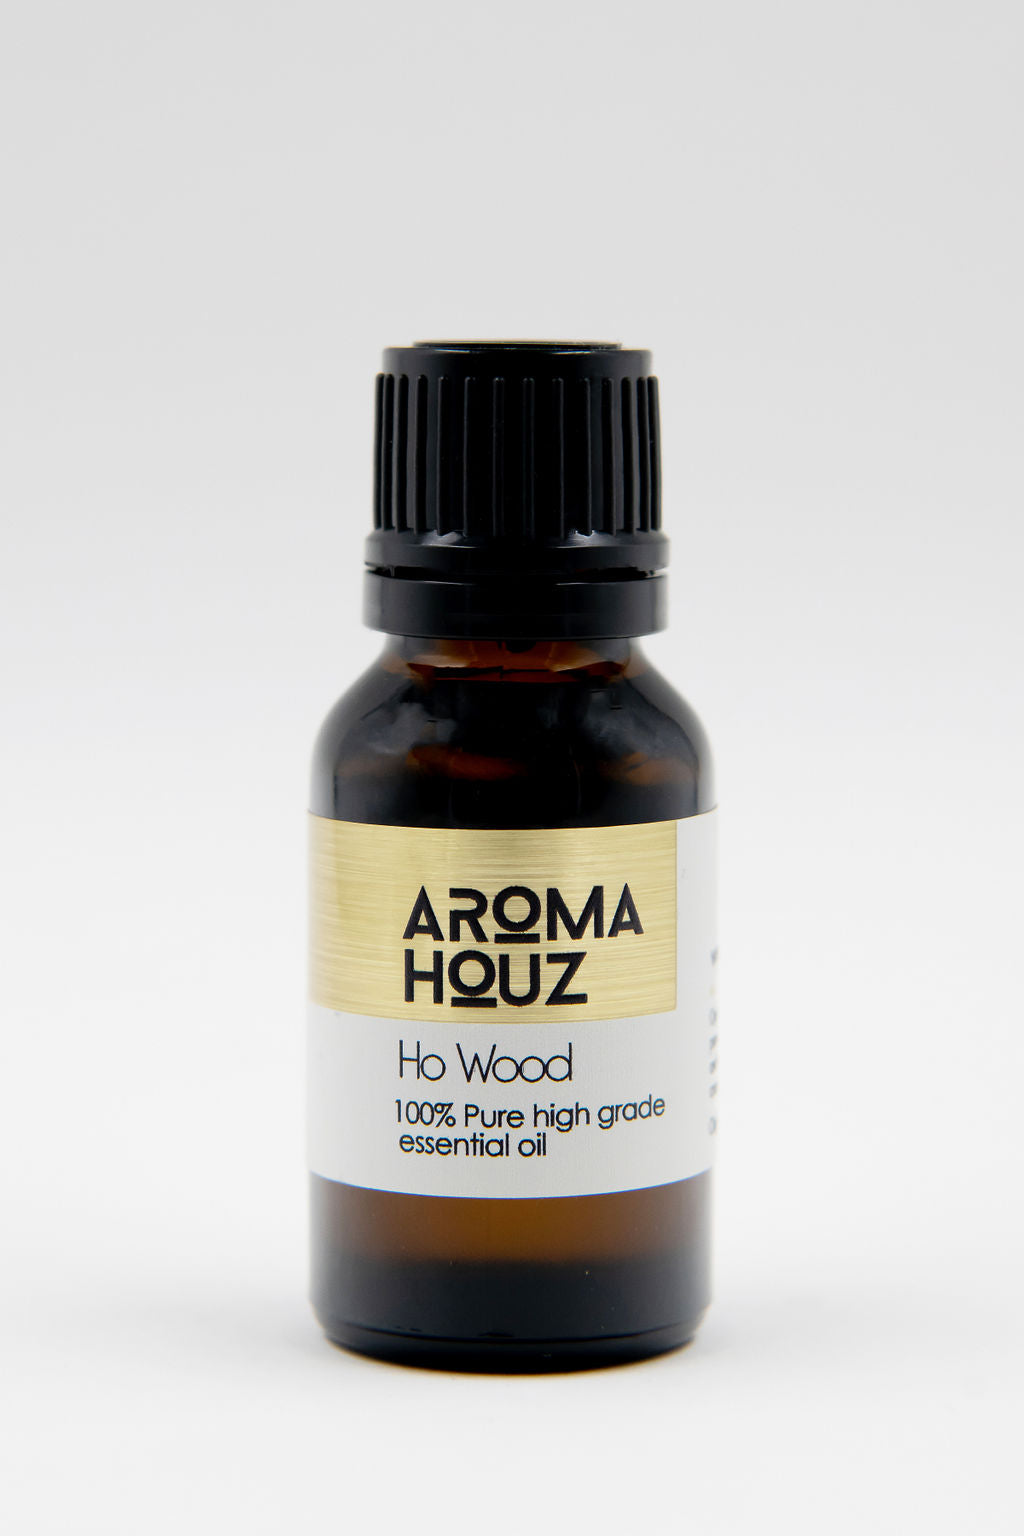 Ho Wood - Aroma Houz